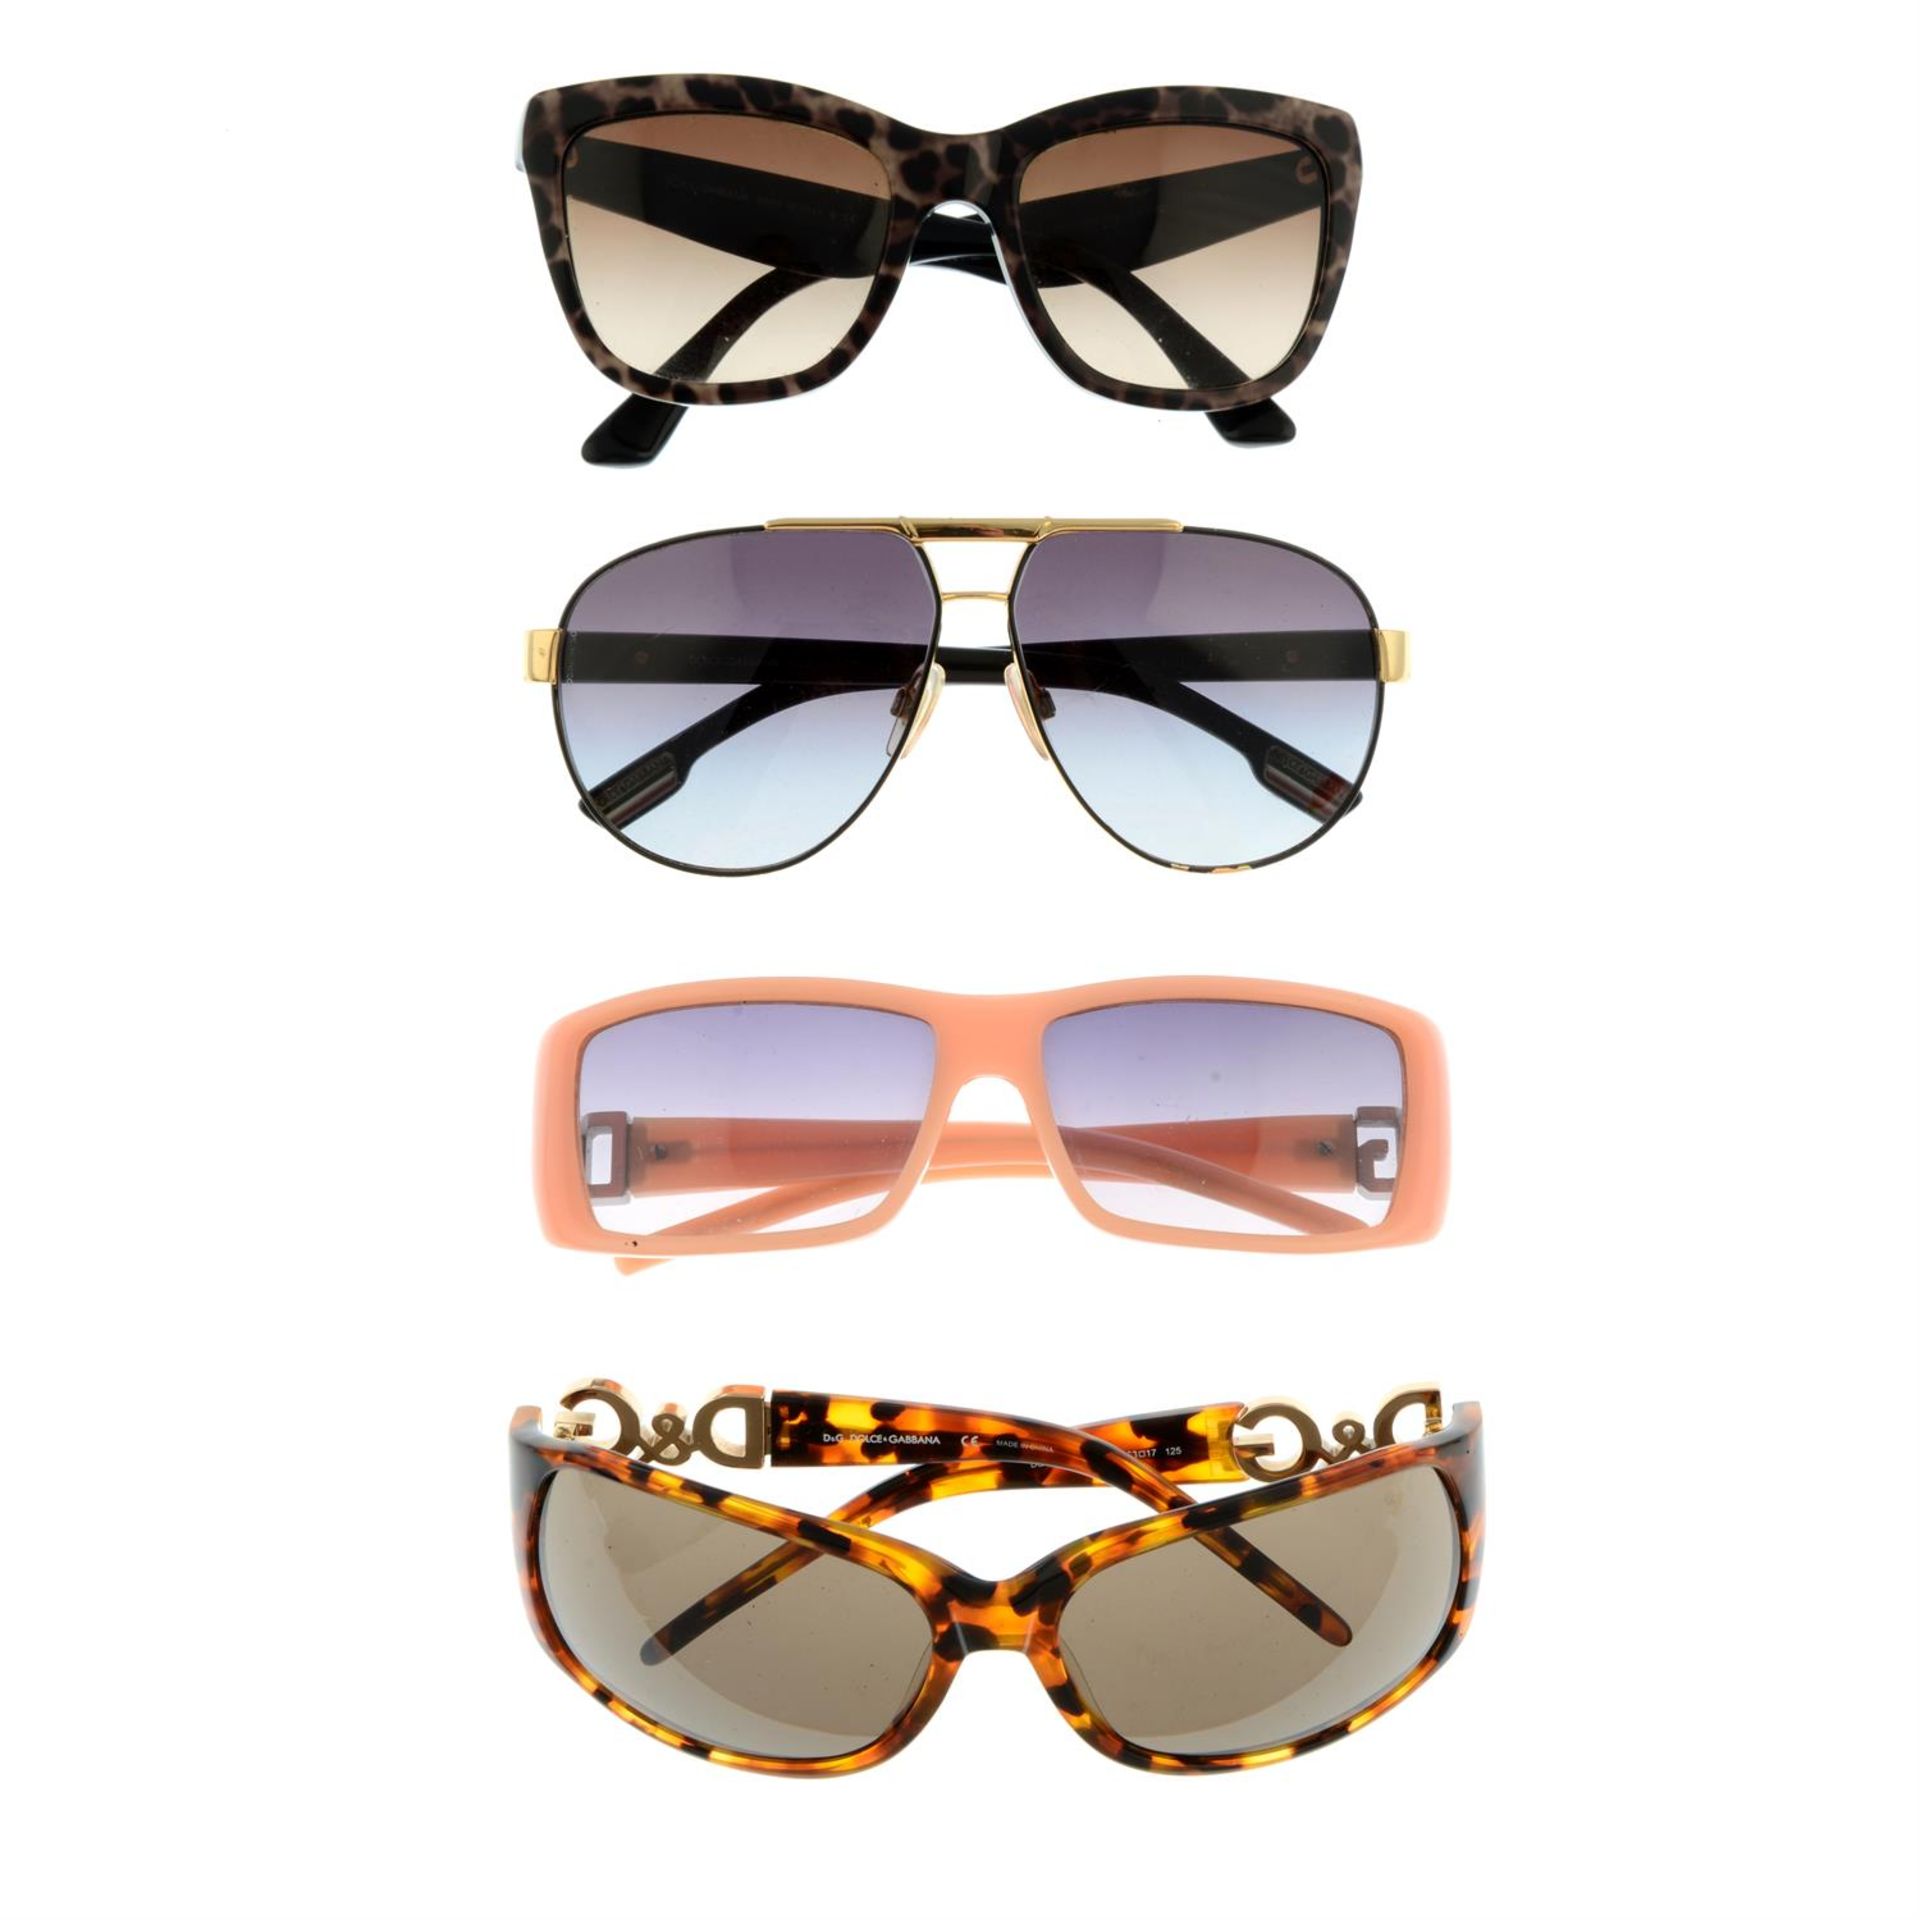 DOLCE & GABBANA - four pairs of sunglasses.